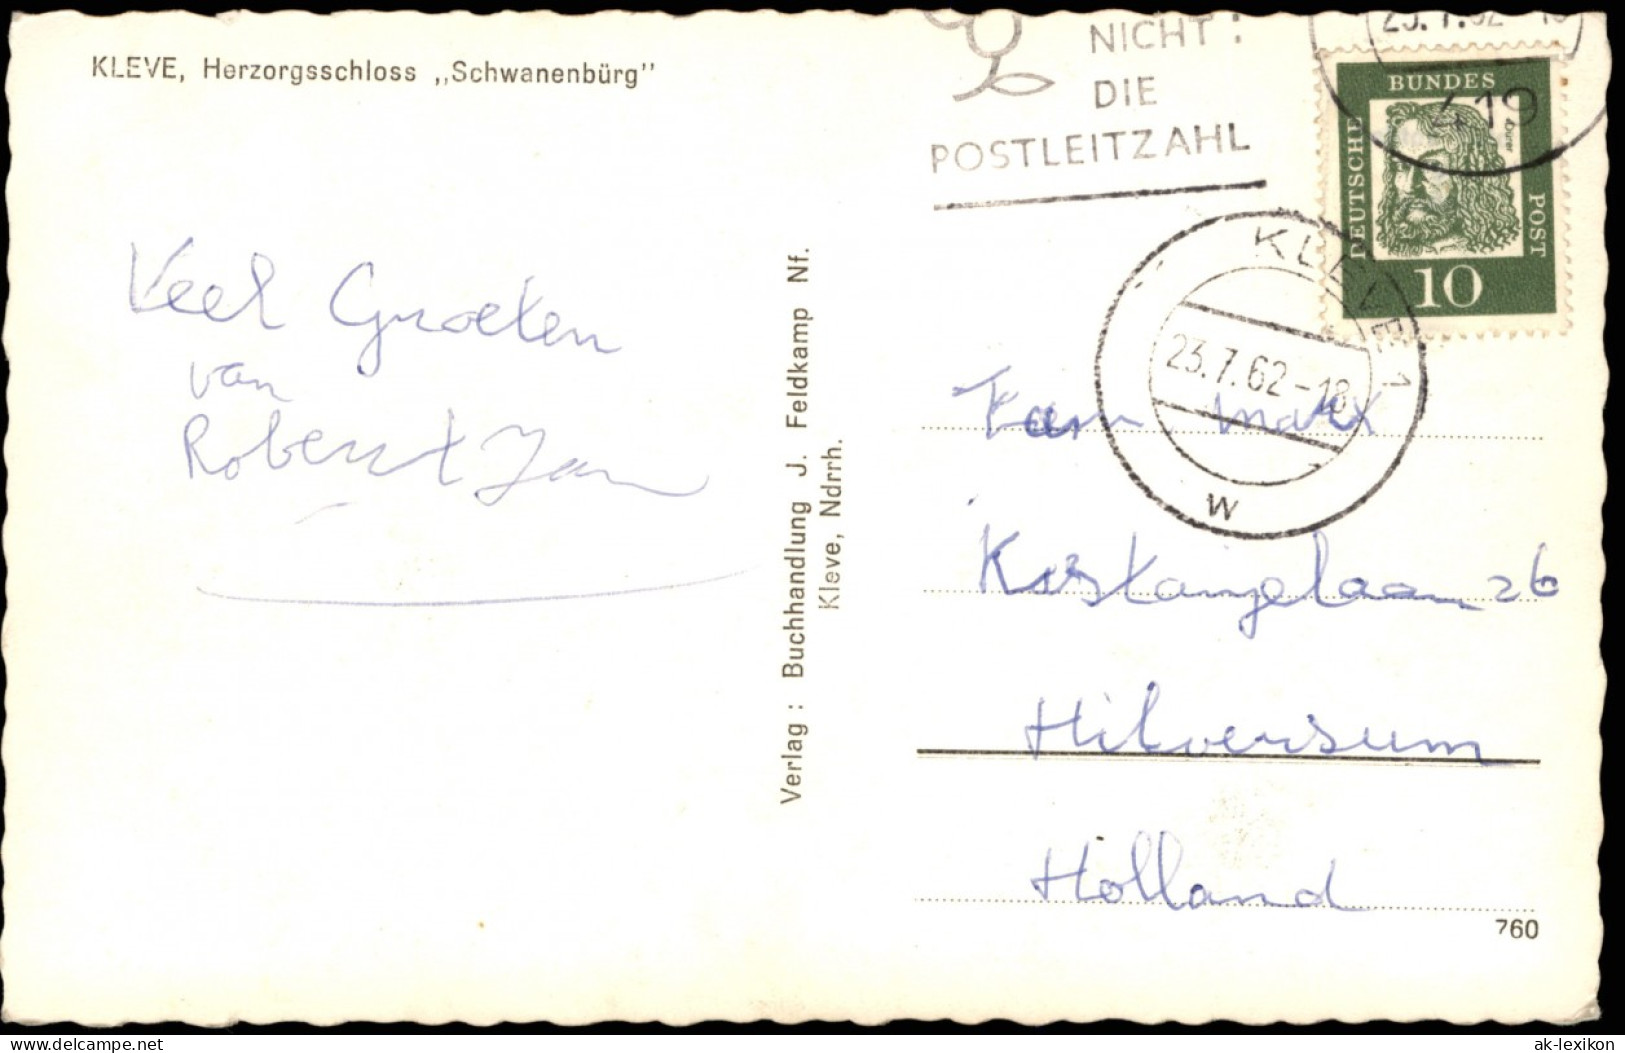 Ansichtskarte Kleve Herzorgsschloss Schwanenbürg 1962 - Kleve